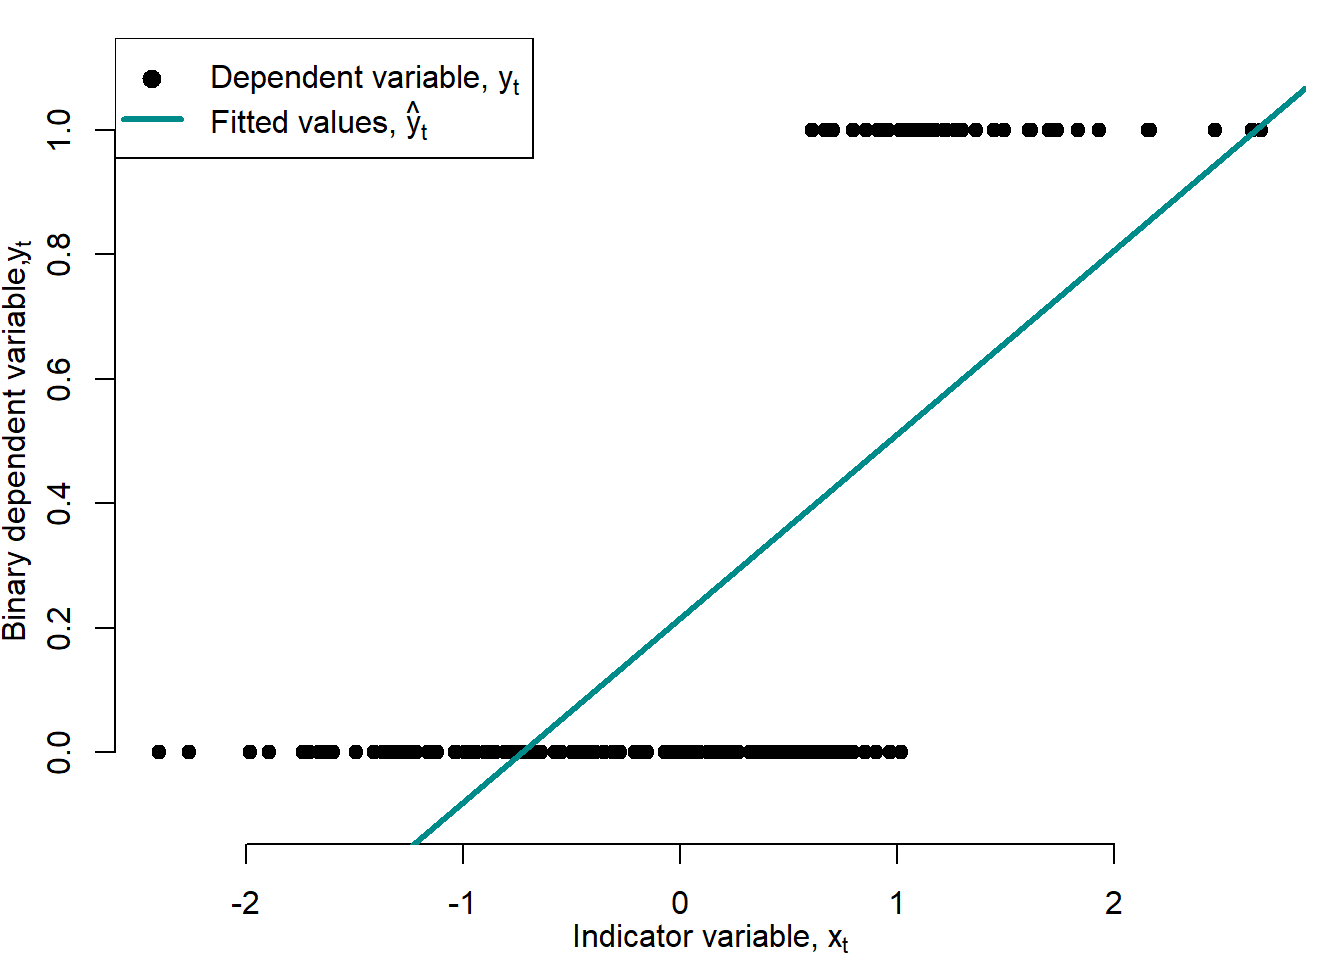 Linear probability model